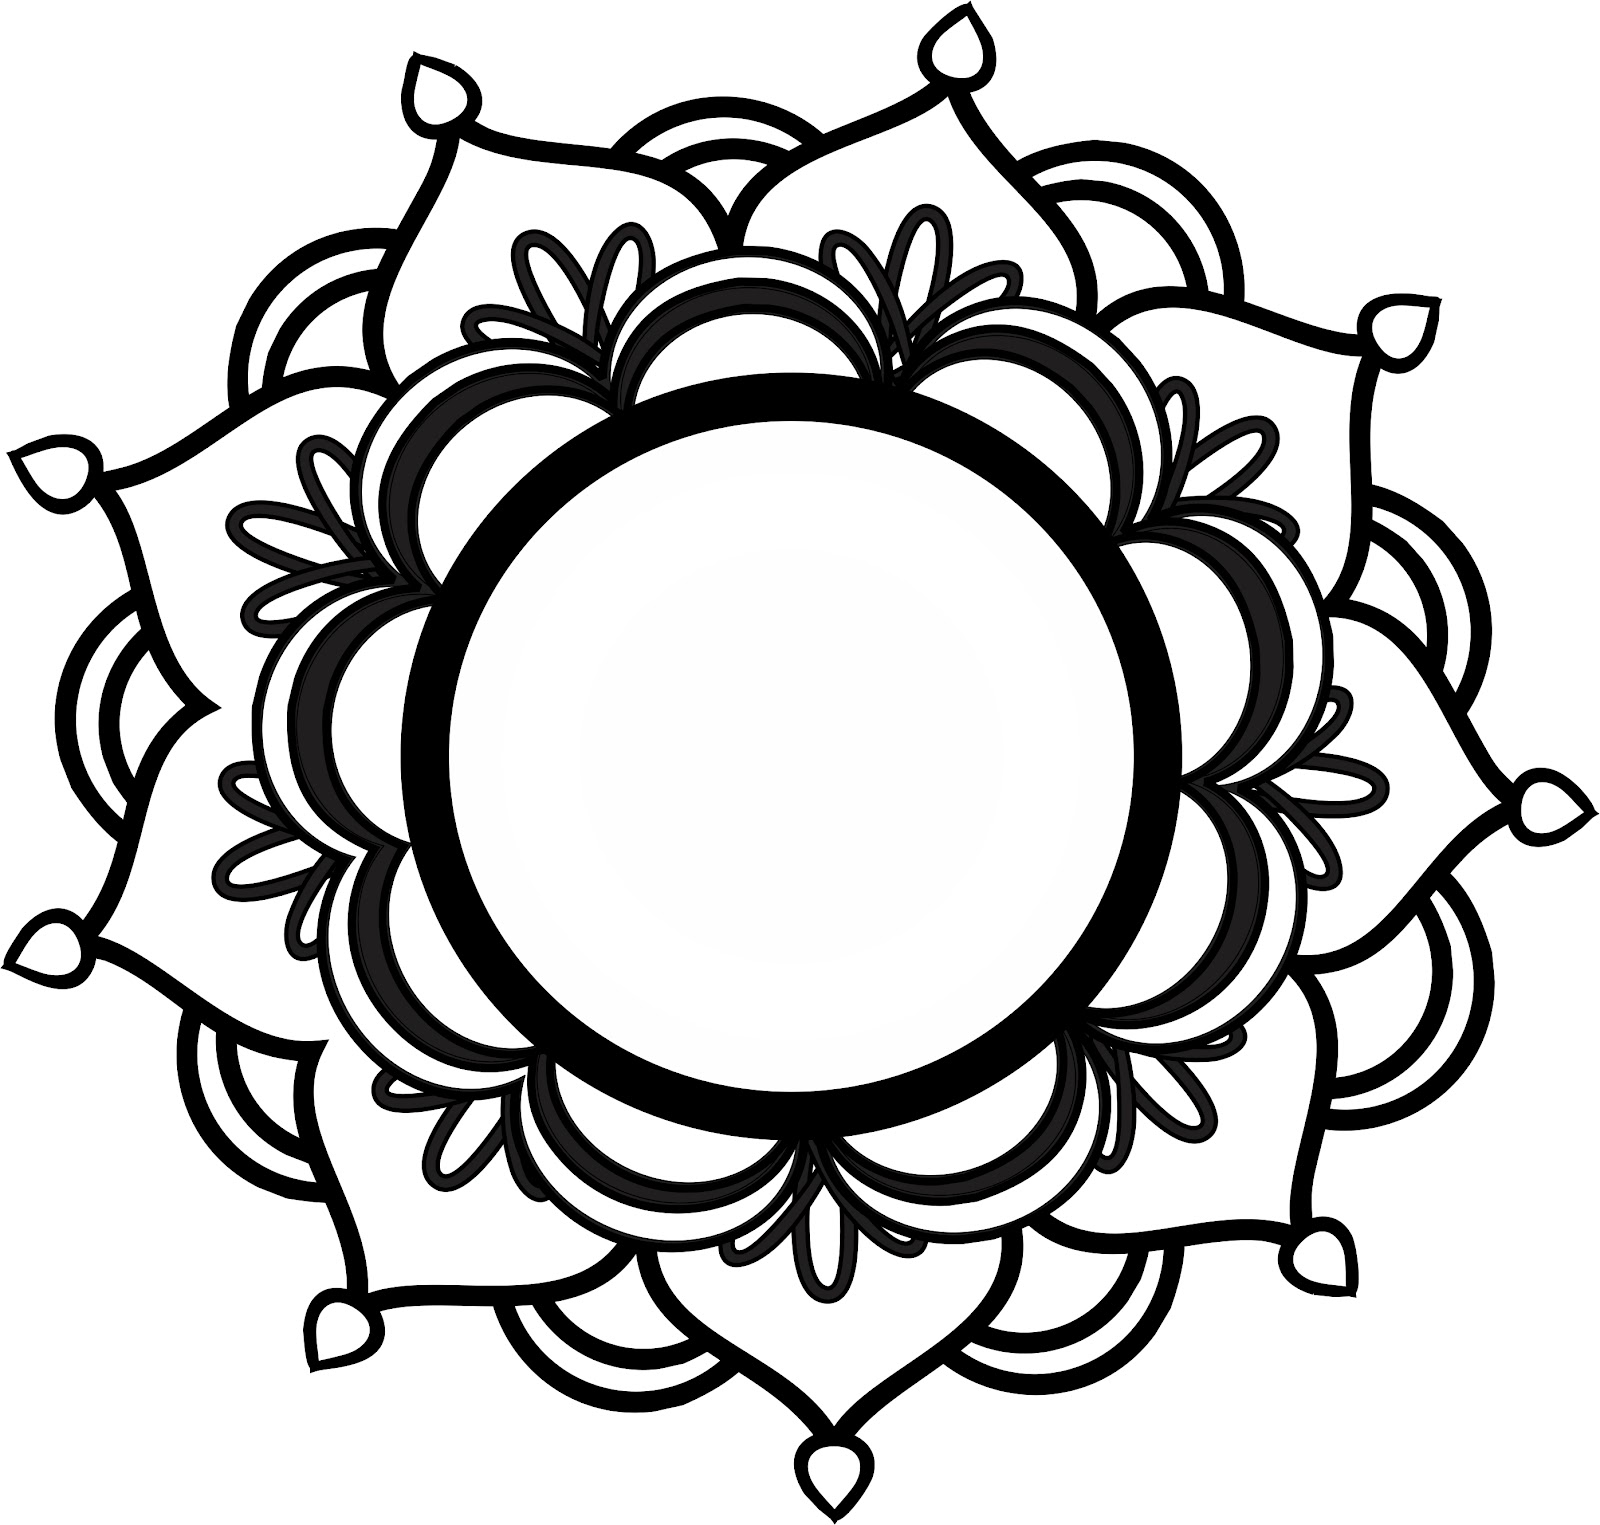 Mandala clipart cool easy. Clip art library 